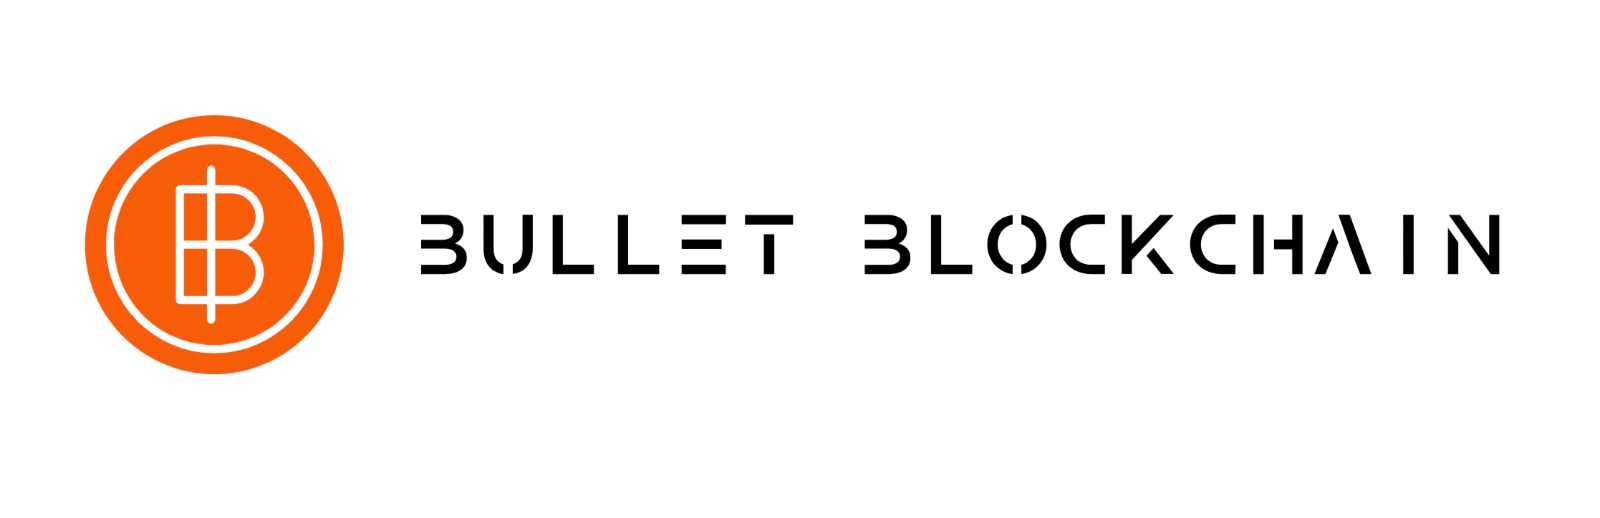 Bullet Blockchain, Inc., Monday, September 27, 2021, Press release picture